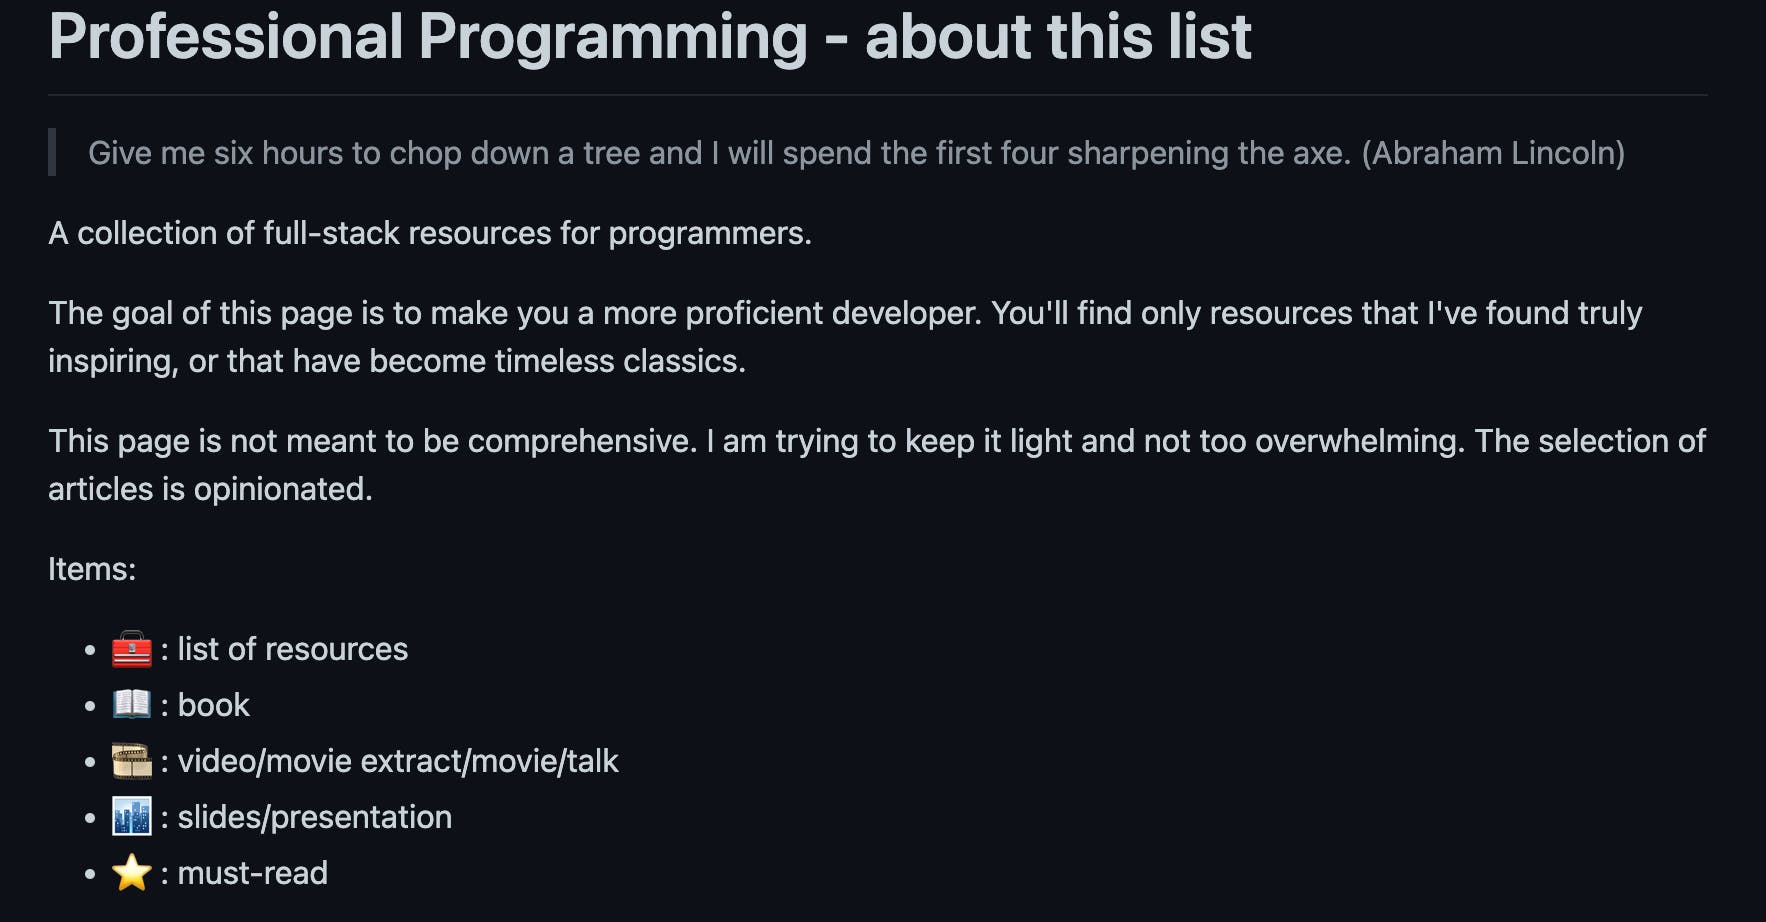 Professional Programming